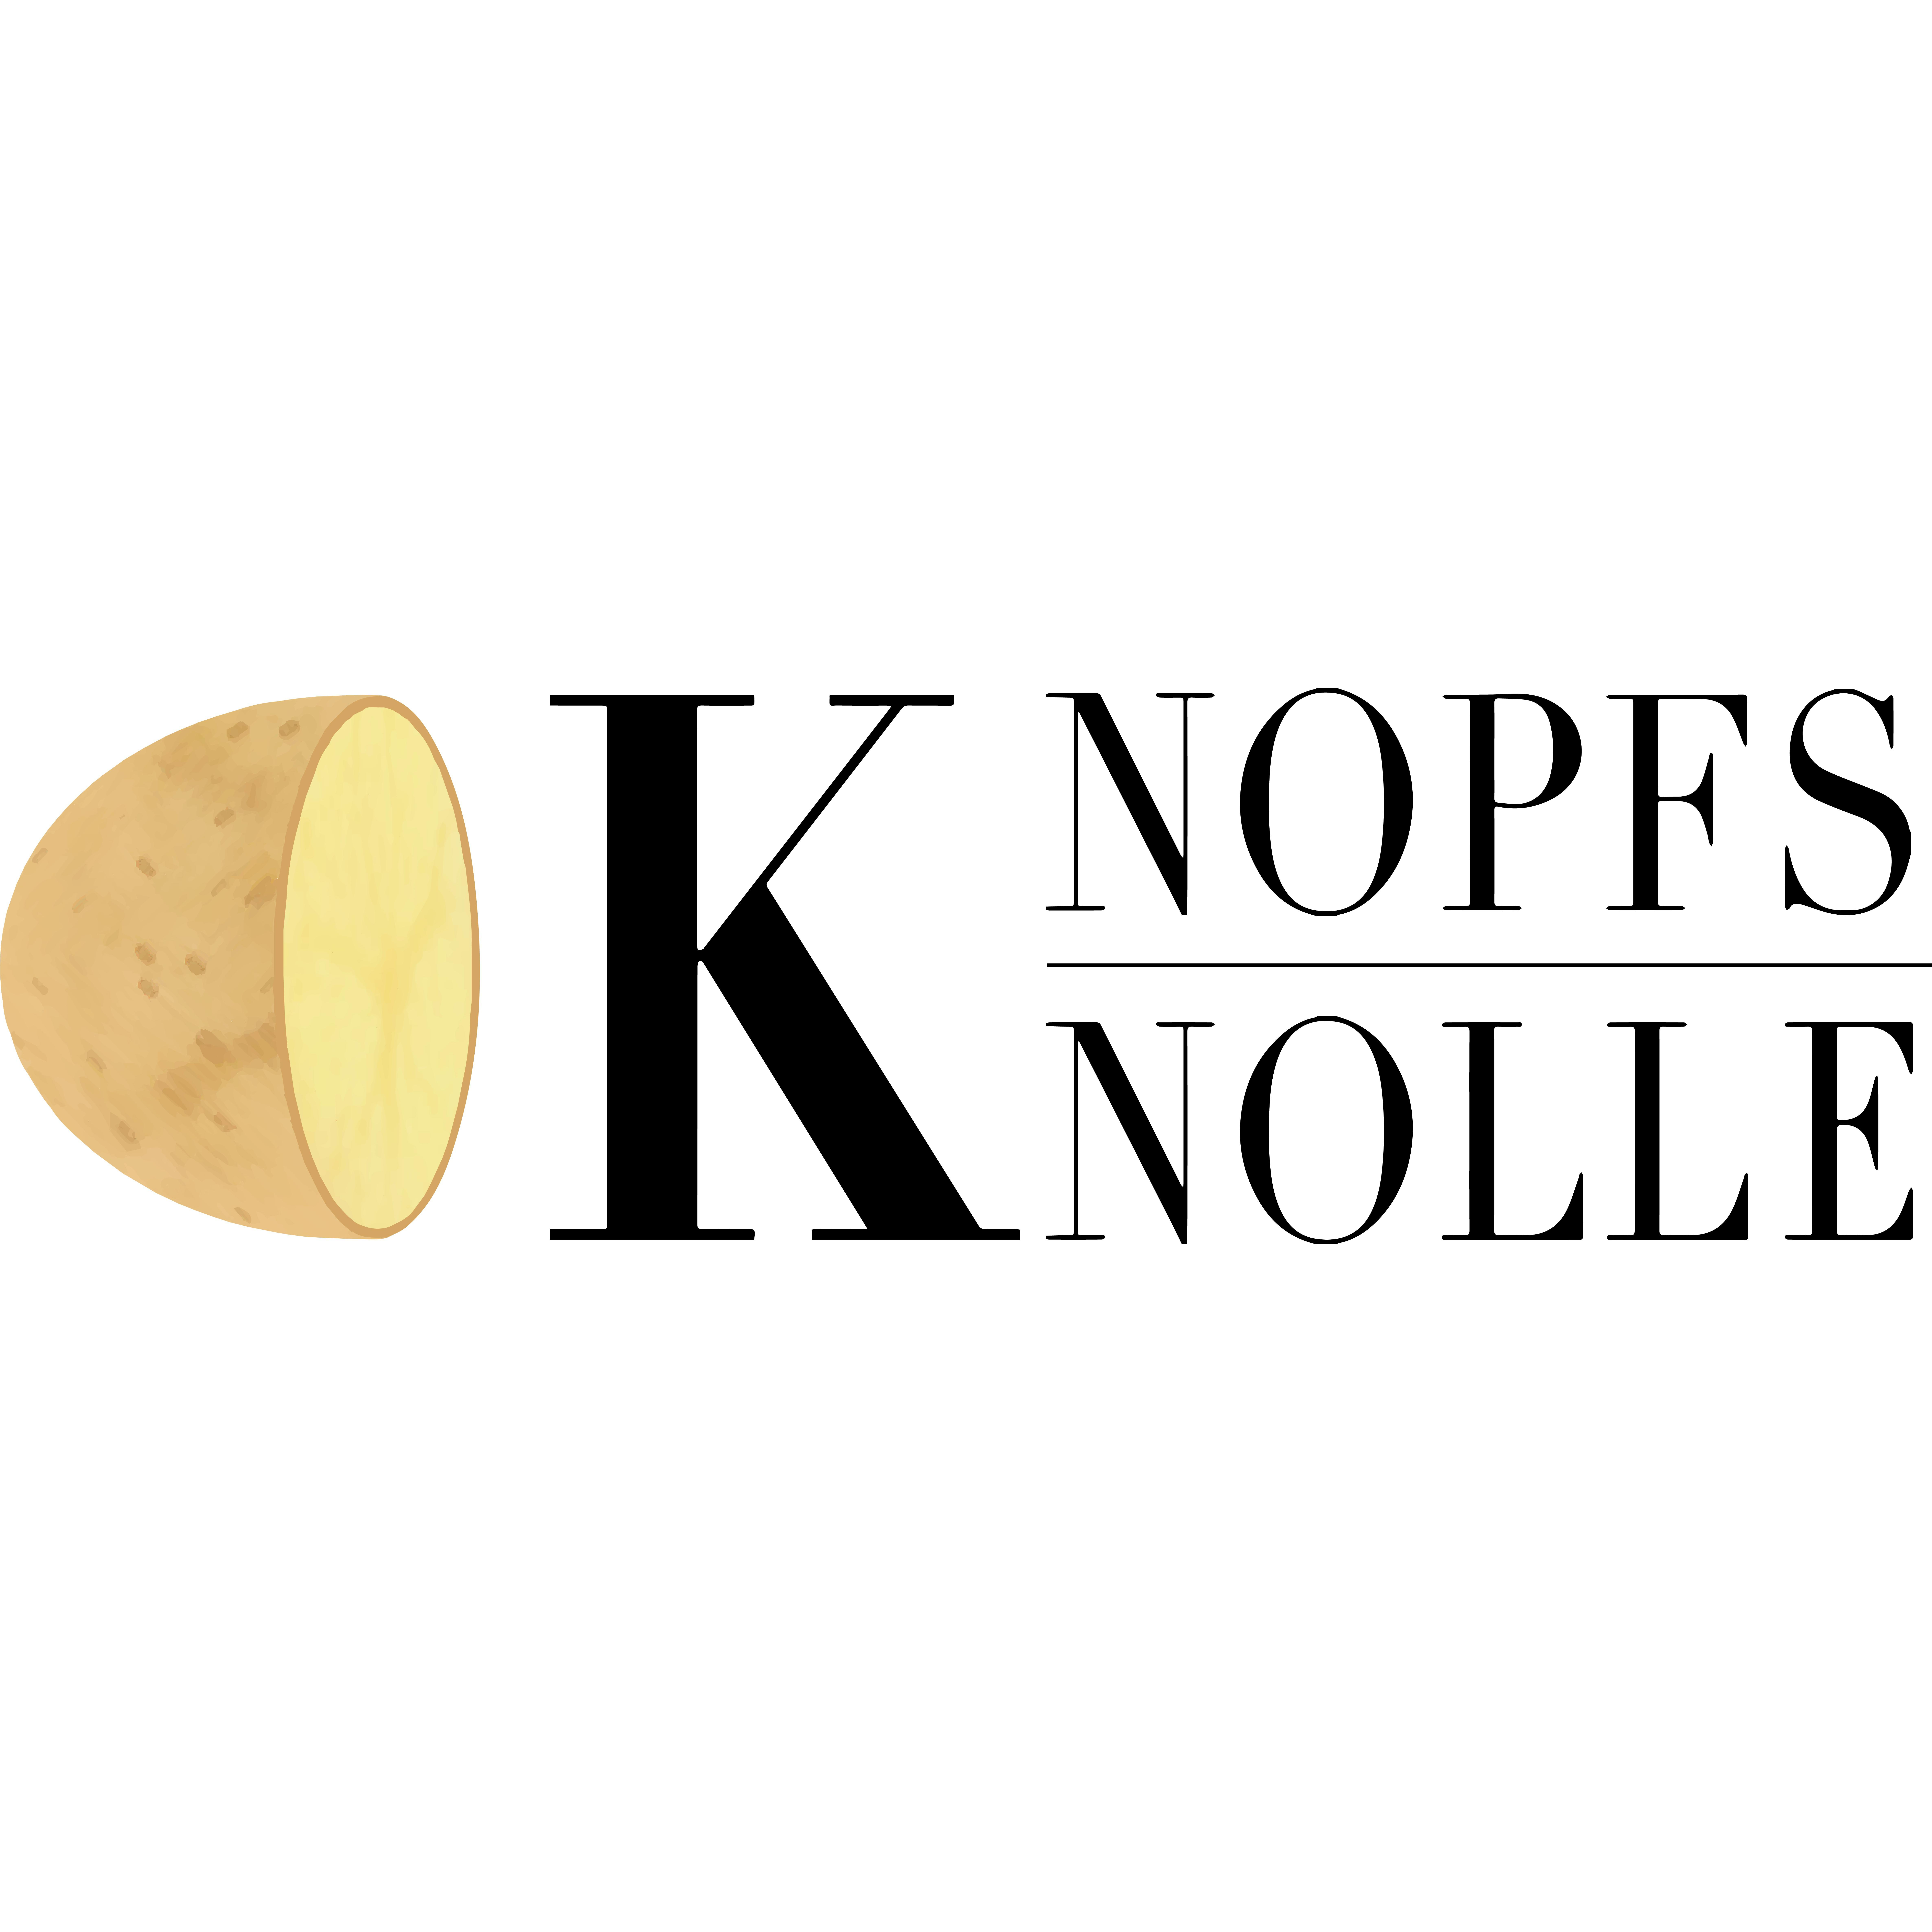 Knopfs Knolle in Münster - Logo